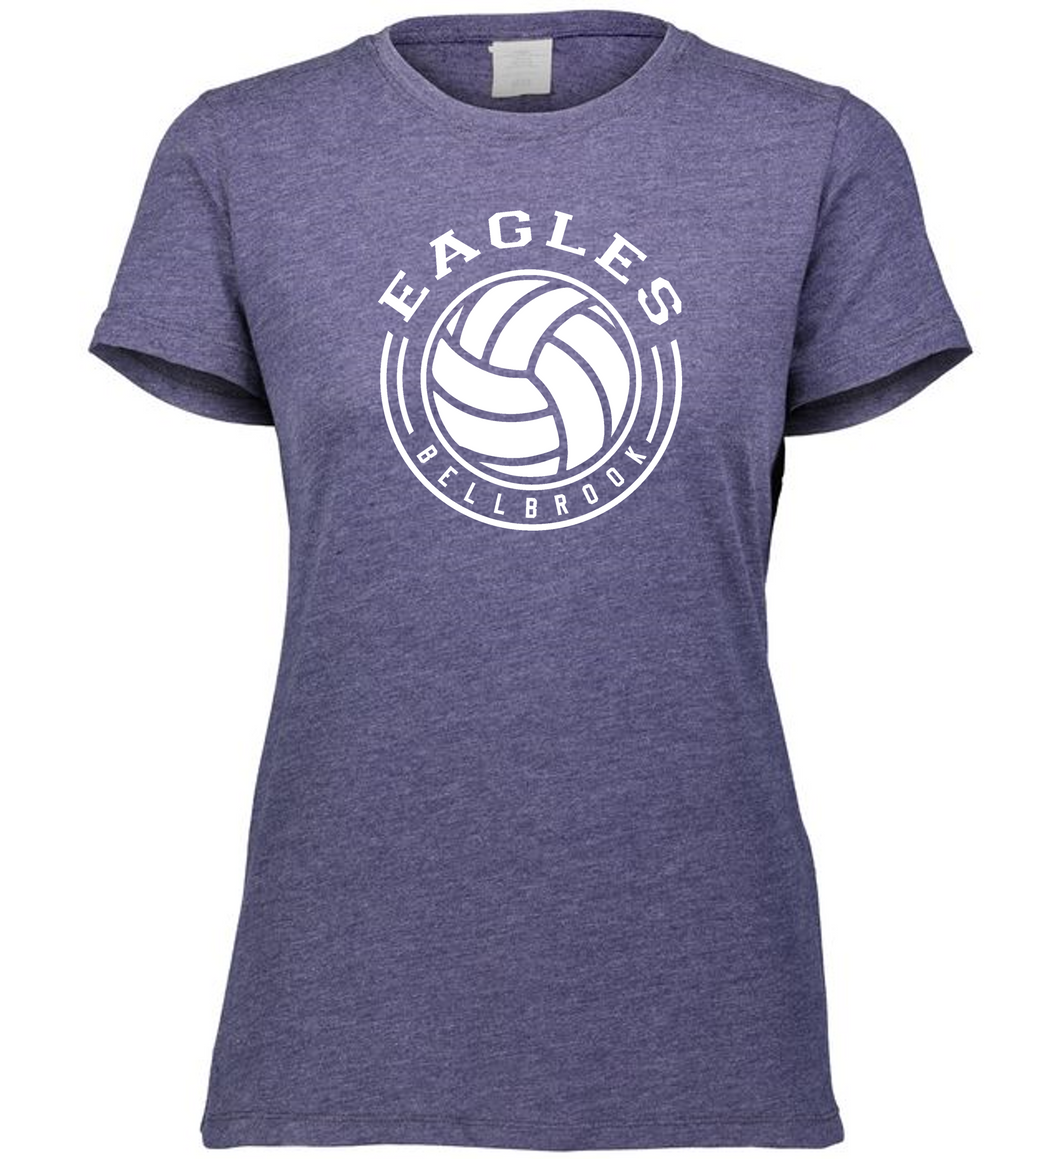 BMS Volleyball Ladies Purple Heather Tri-Blend Shirt